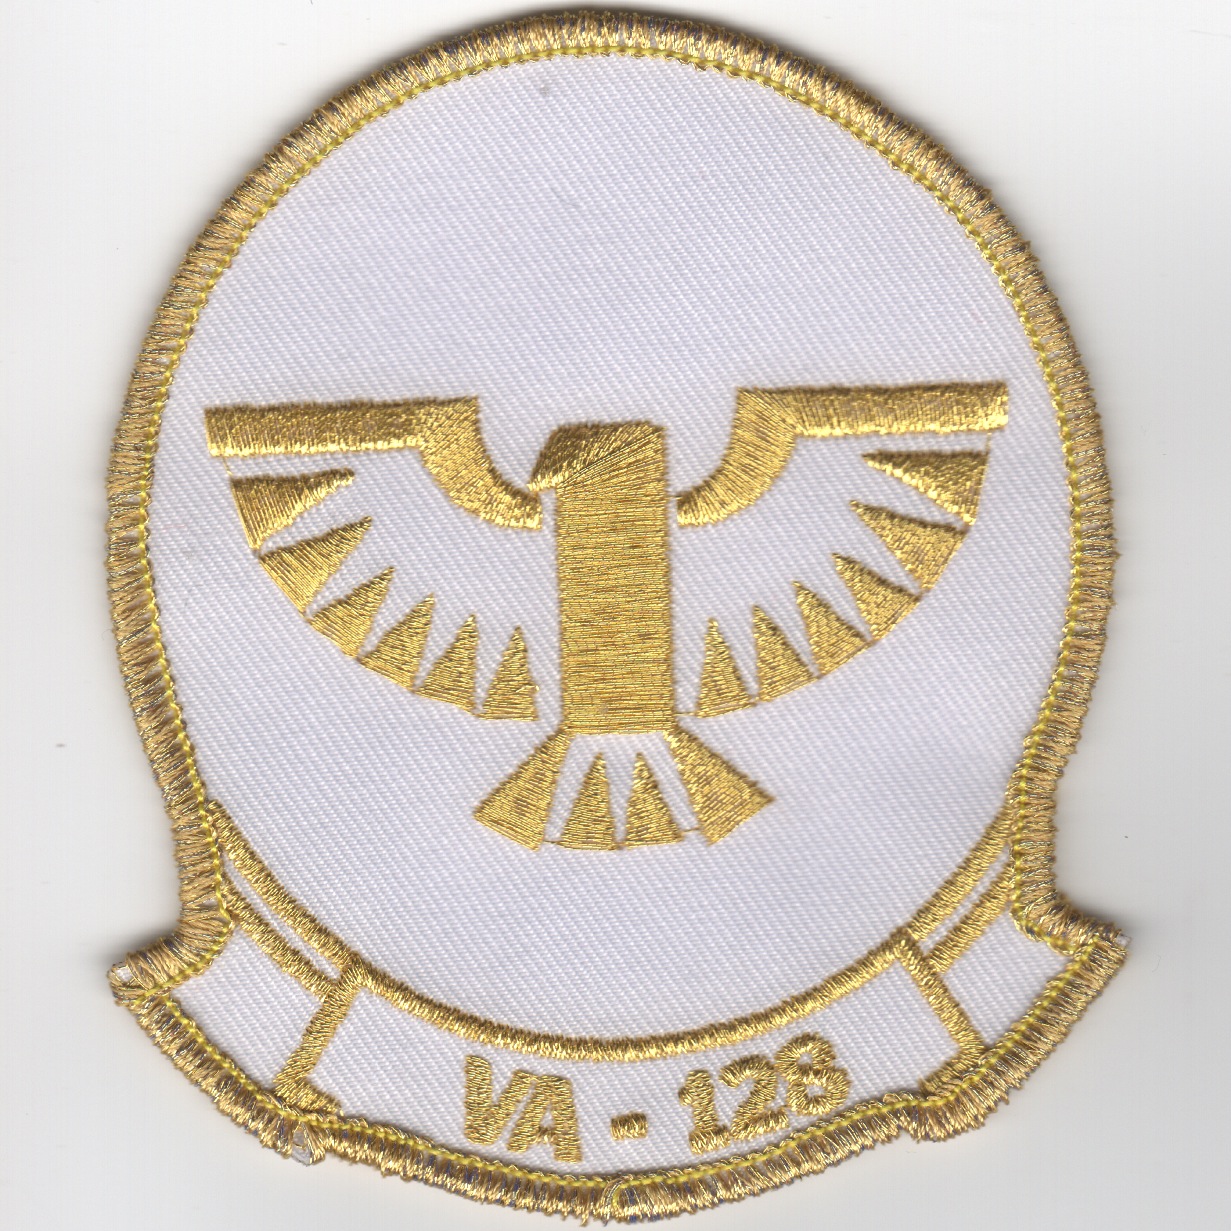 VA-128 Squadron Patch (White/Gold)